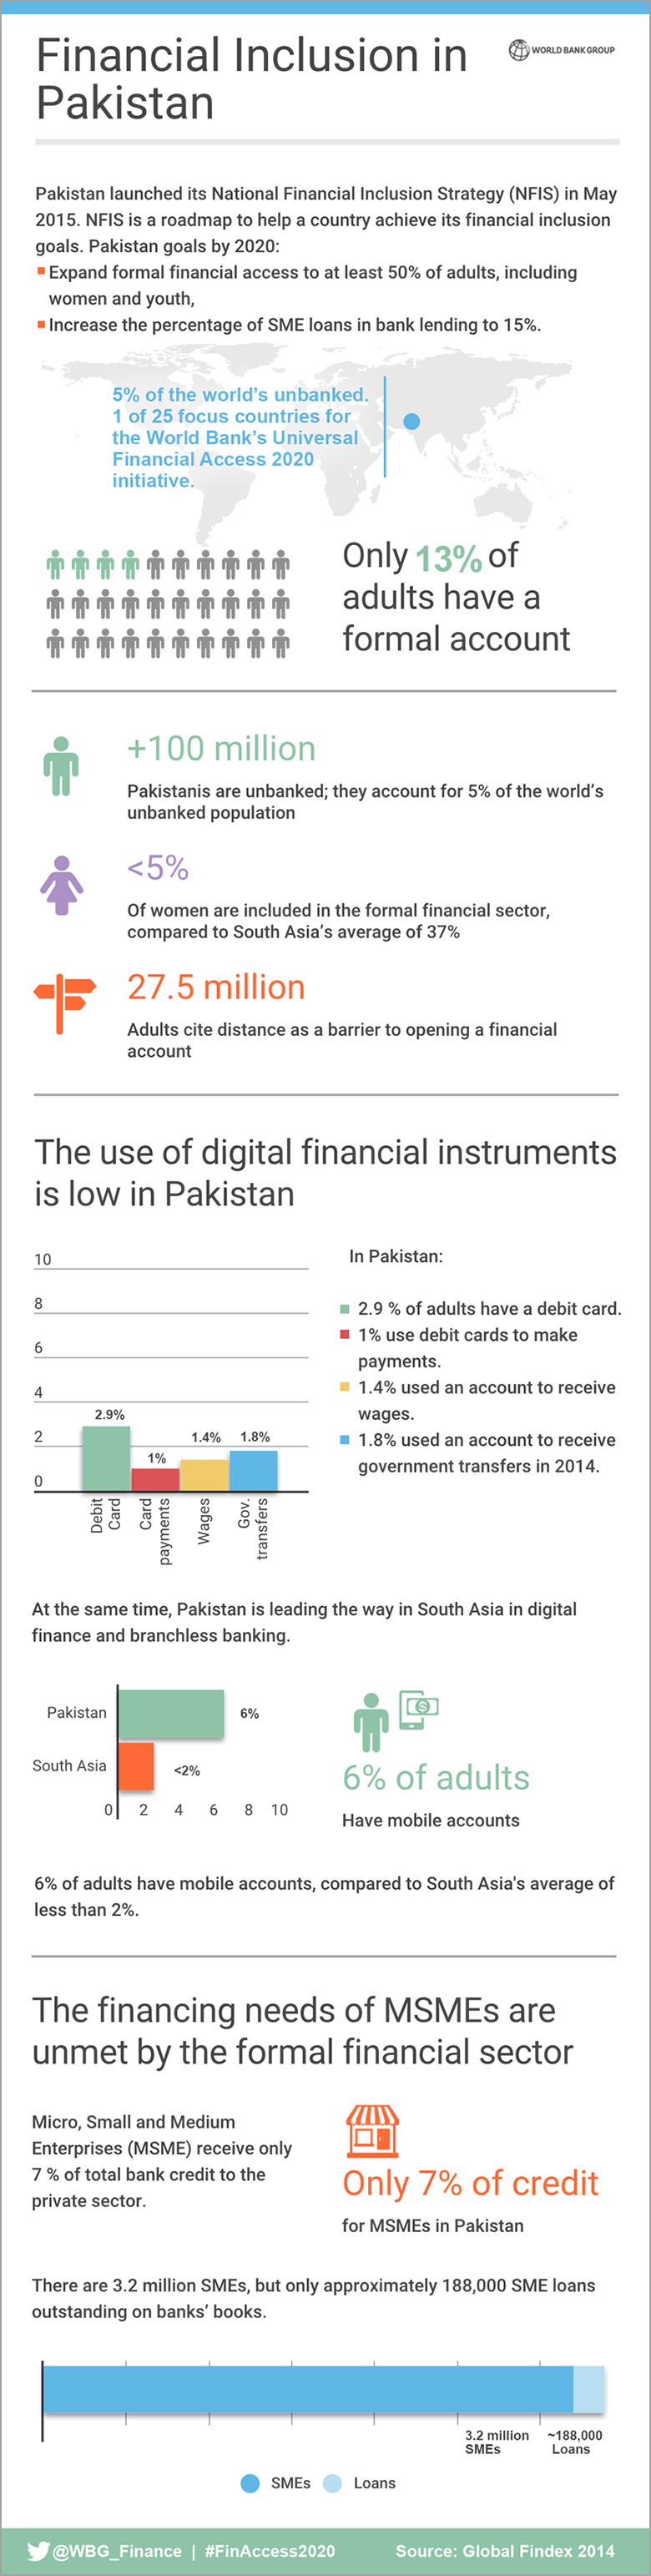 Financial Inclusion in Pakistan